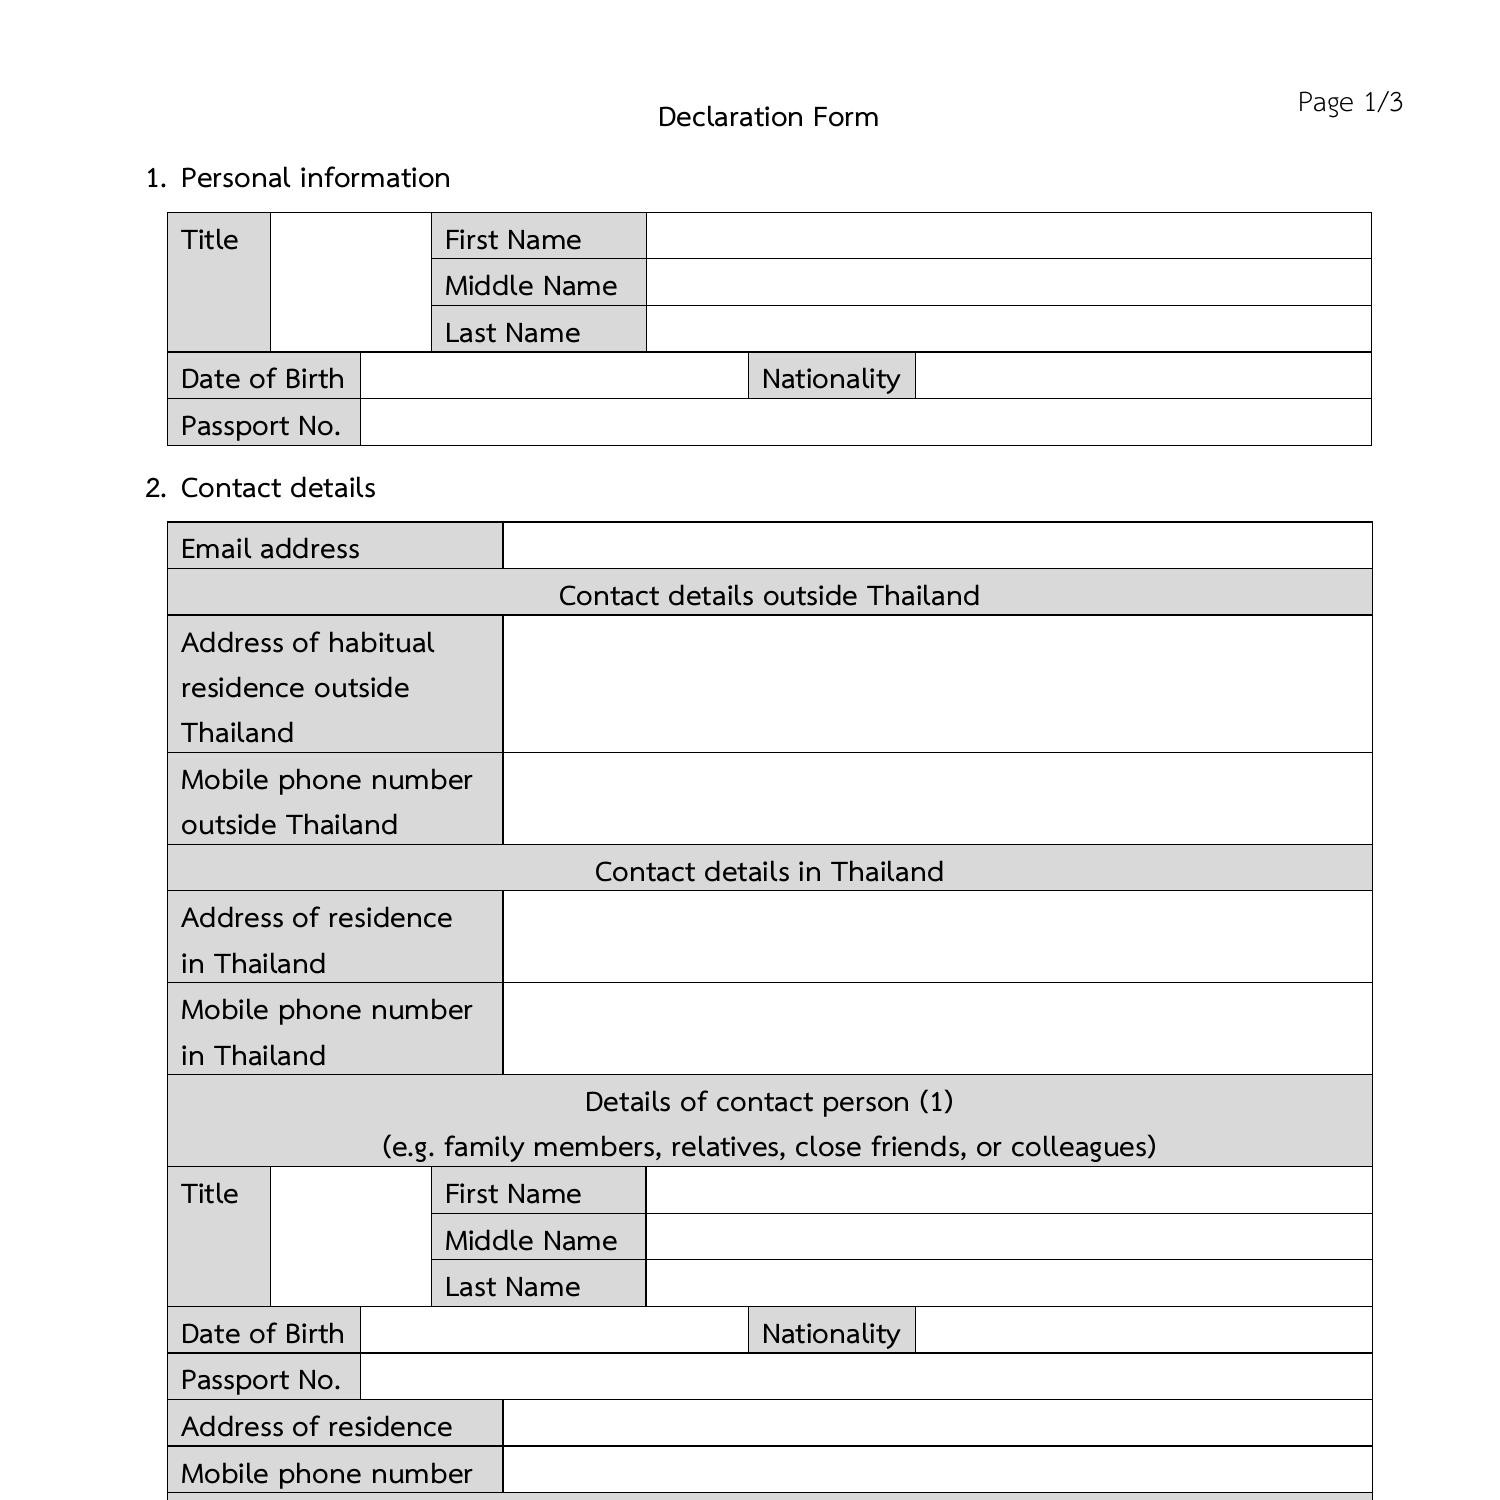 Declaration Form pdf DocDroid